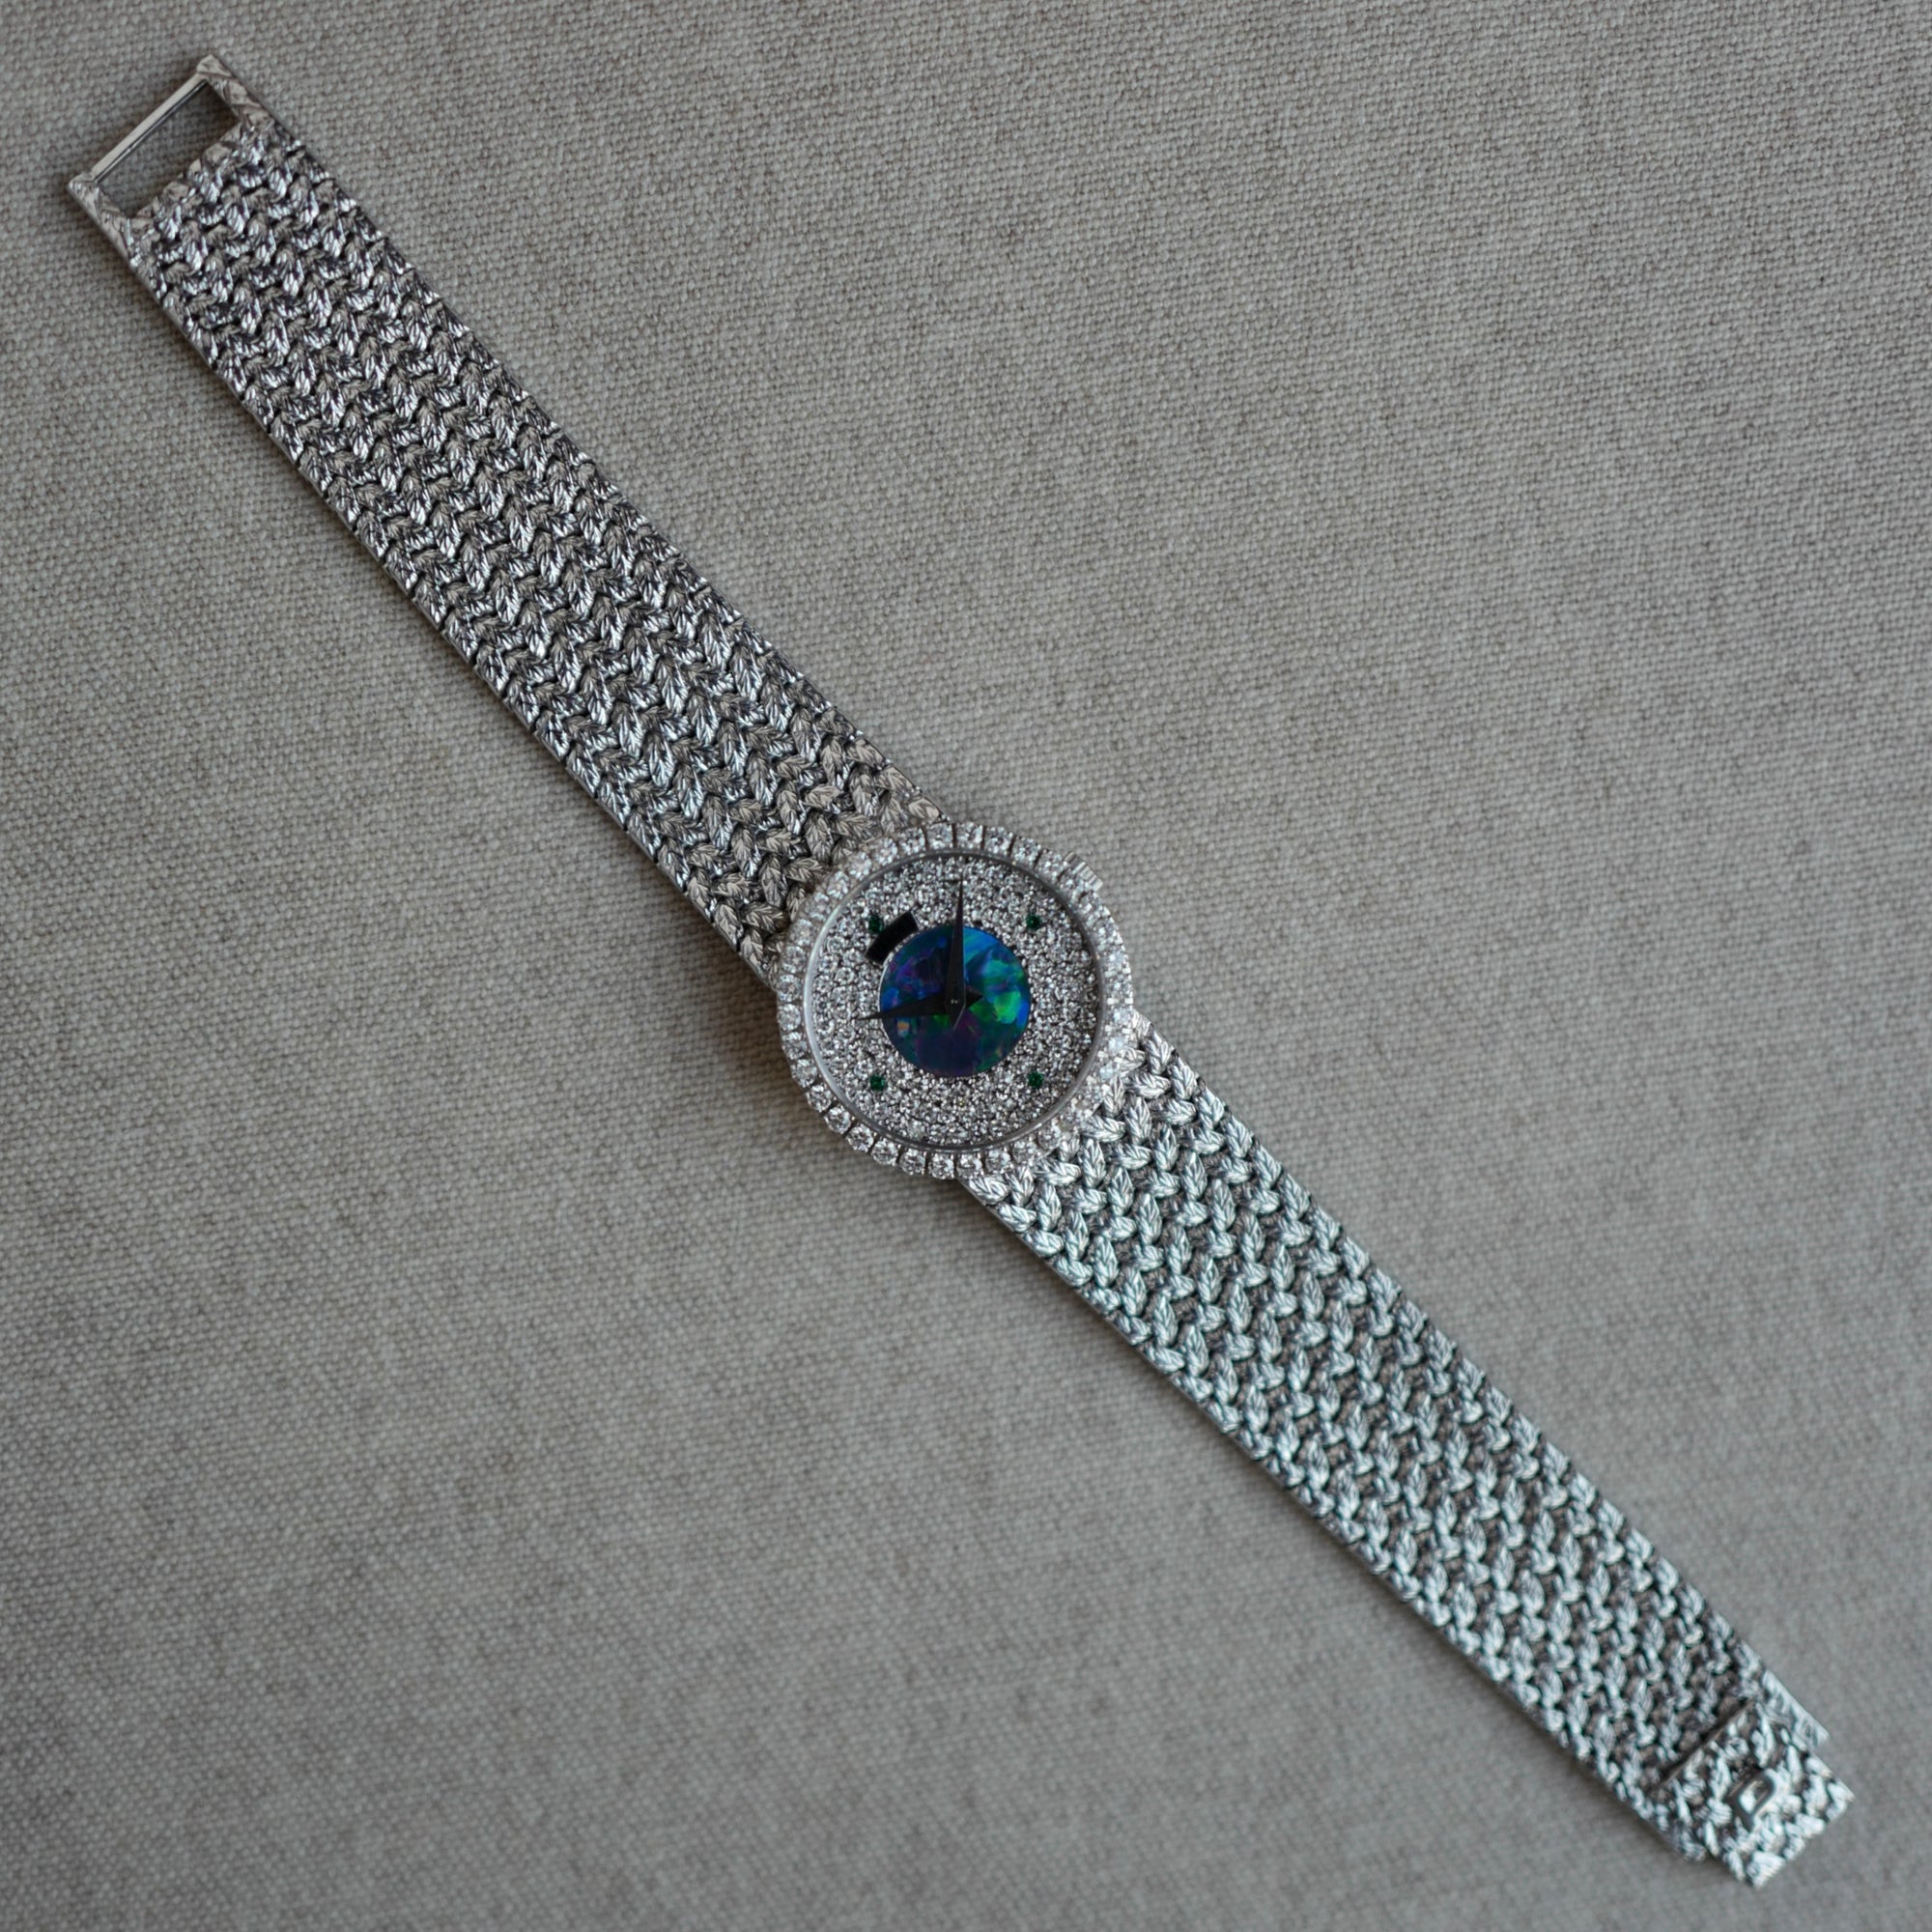 Piaget - Piaget White Gold Diamond Opal Watch Ref. 9706D2 - The Keystone Watches